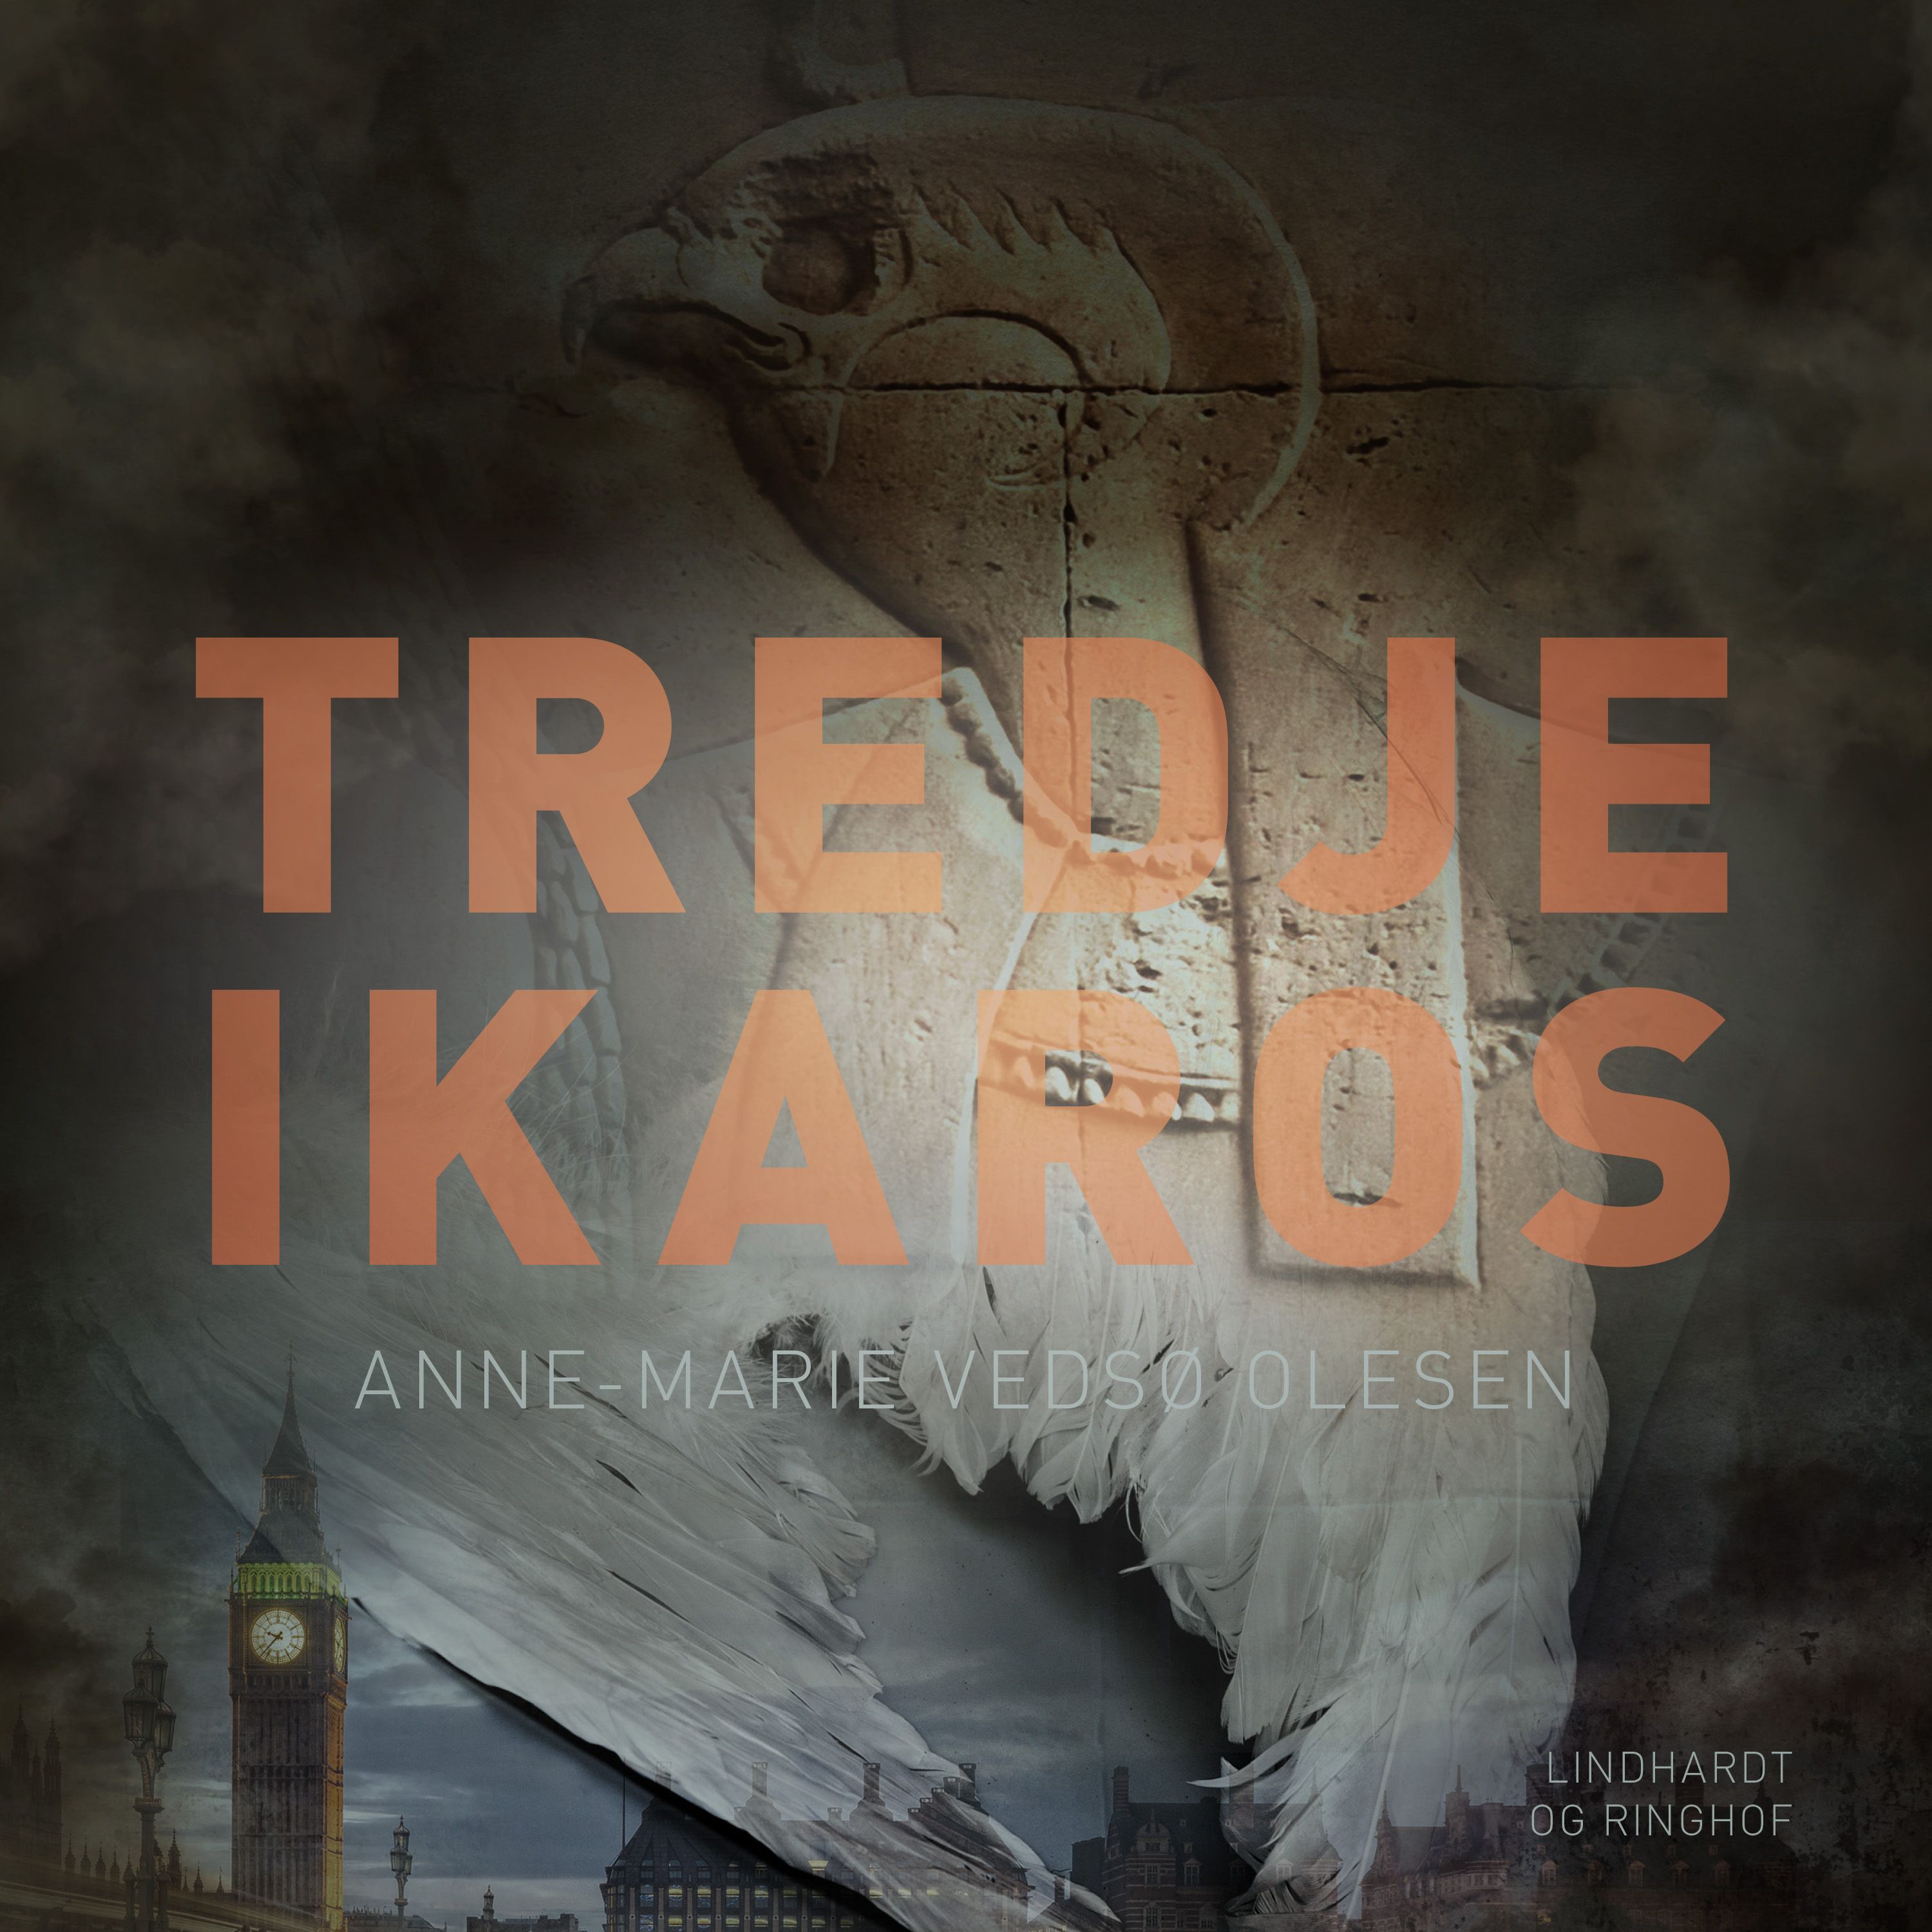 Tredje Ikaros, audiobook by Anne-Marie Vedsø Olesen